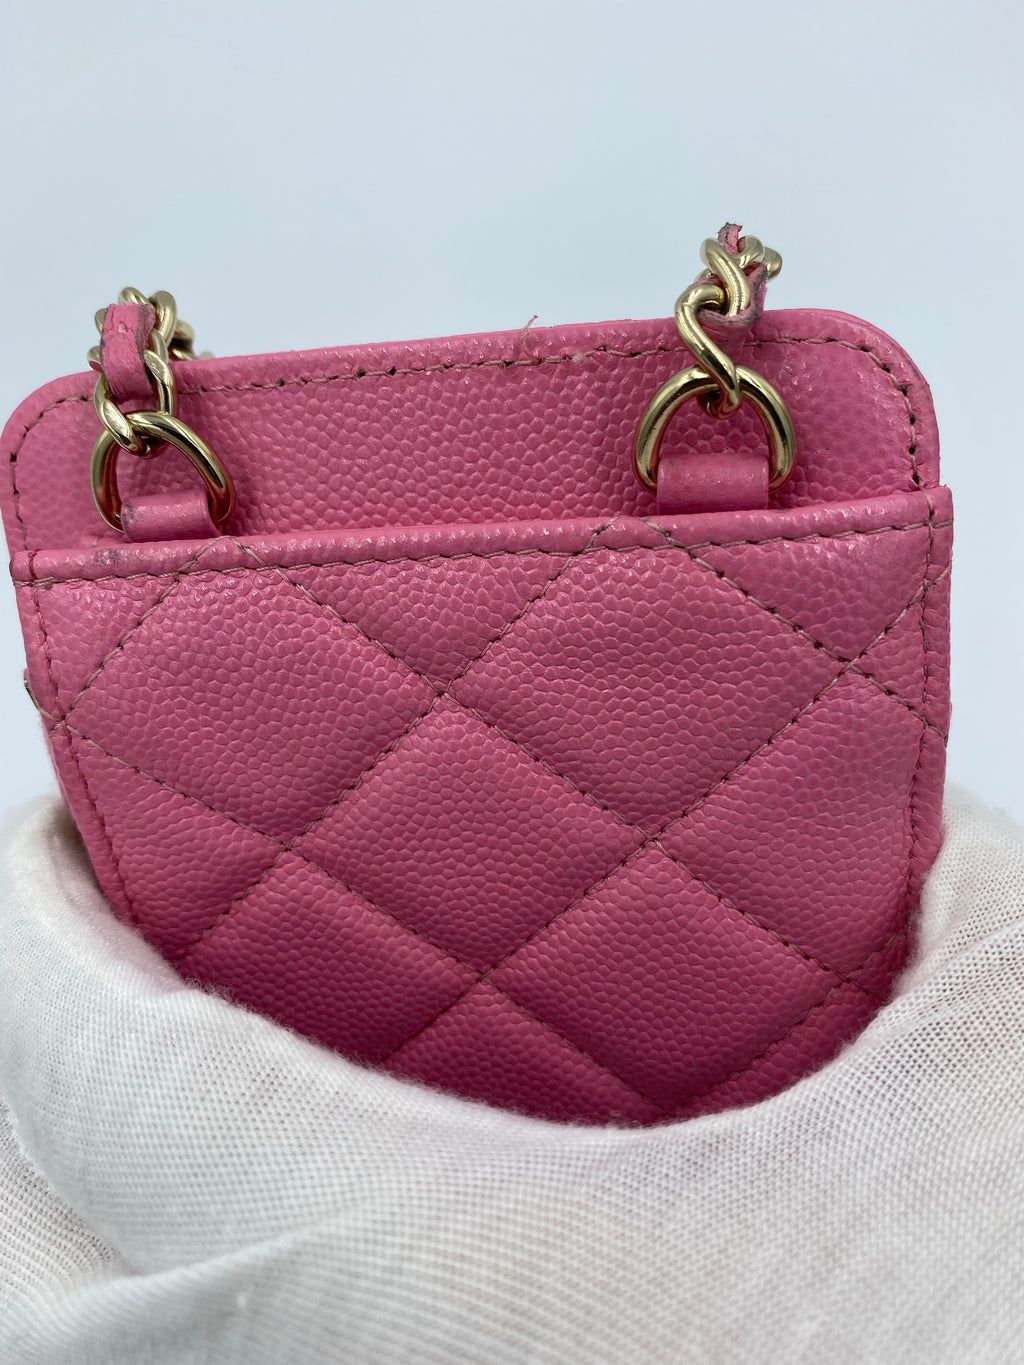 Chanel Leather Pearl Crush Phone Holder Crossbody Bag